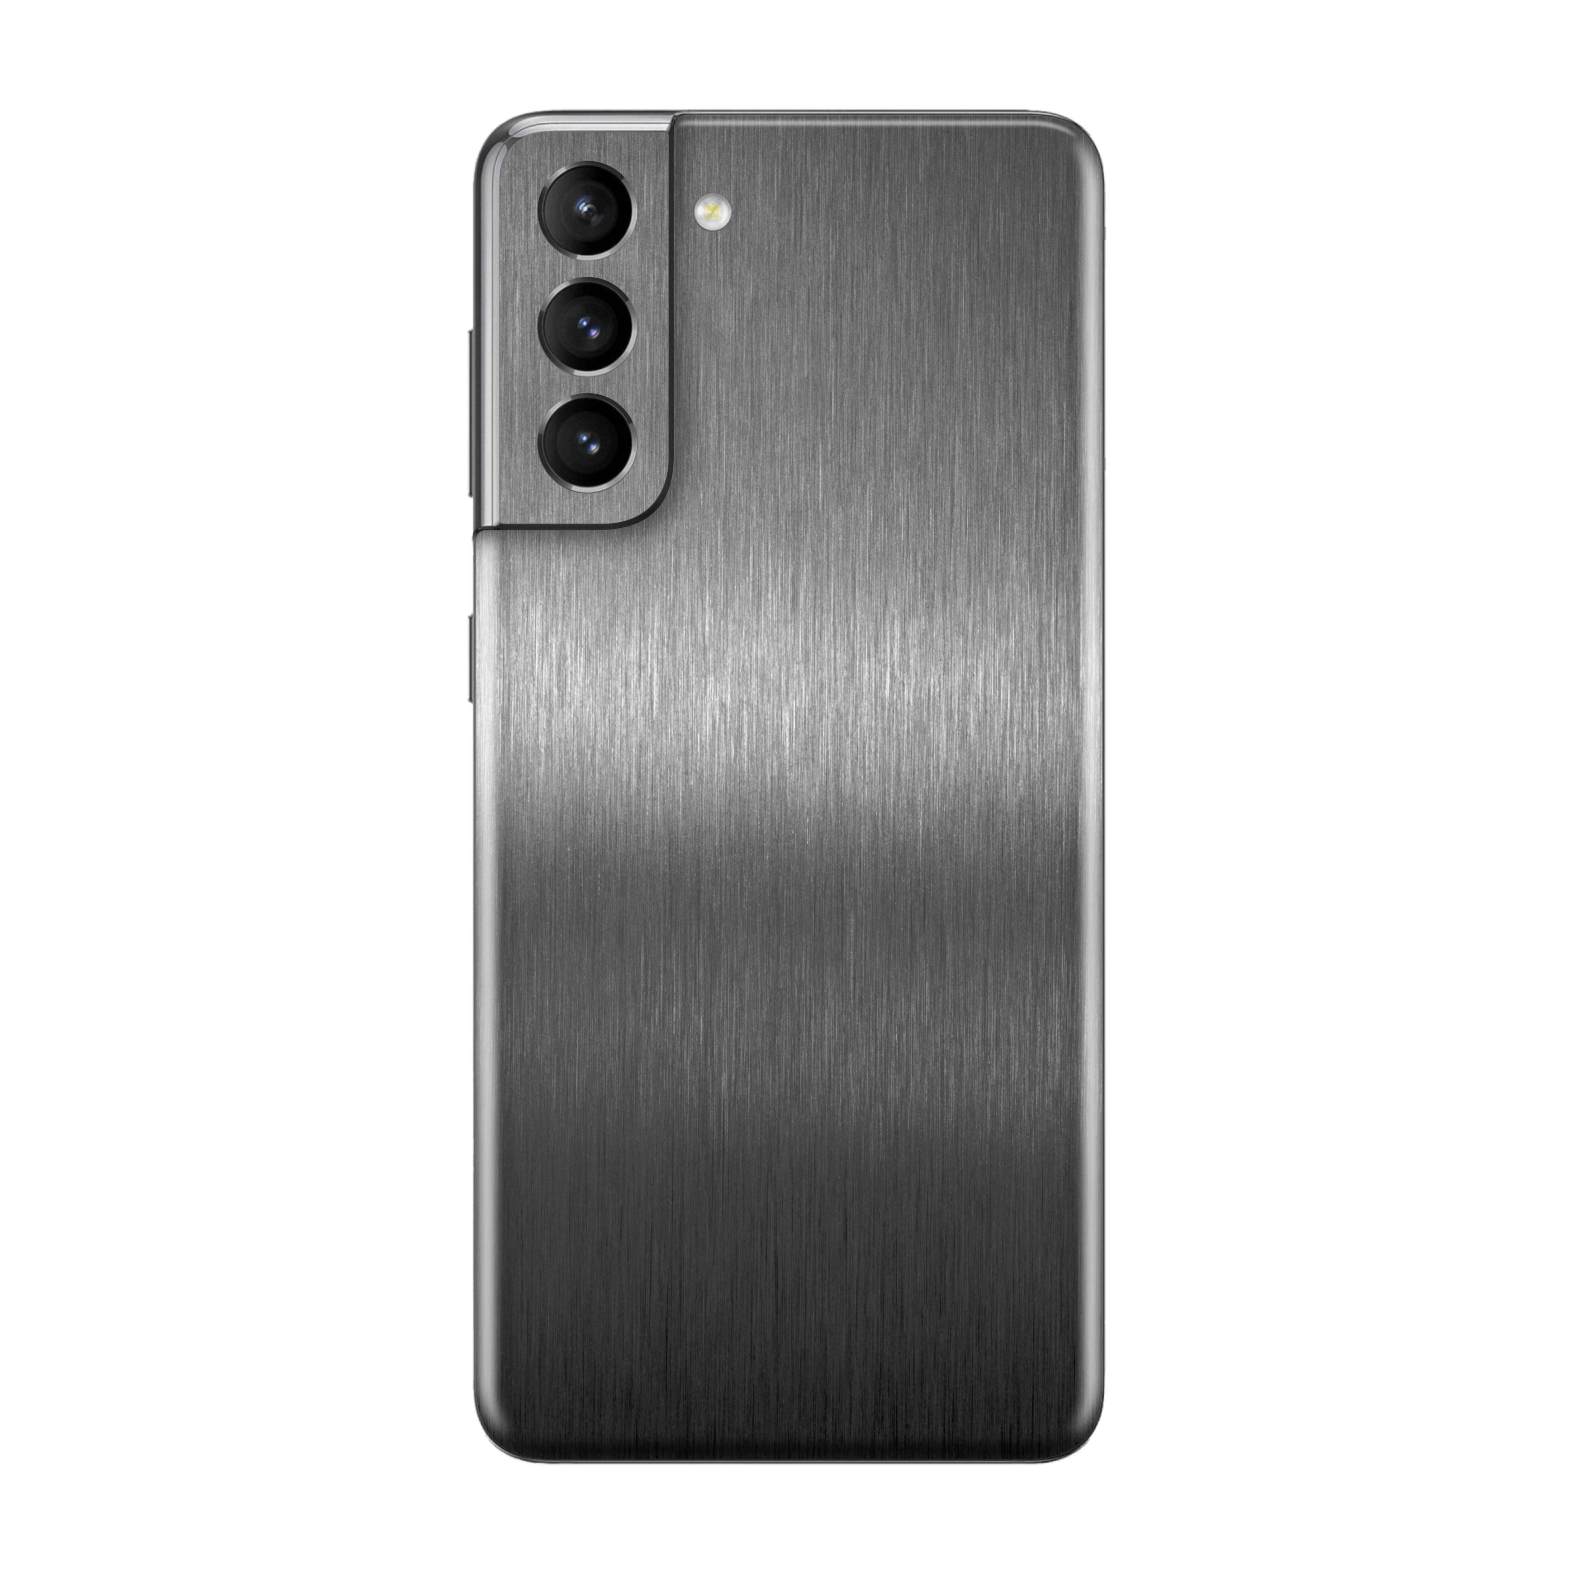 Samsung Galaxy S21+ PLUS Brushed Metal Titanium Metallic Skin Wrap Sticker Decal Cover Protector by EasySkinz | EasySkinz.com